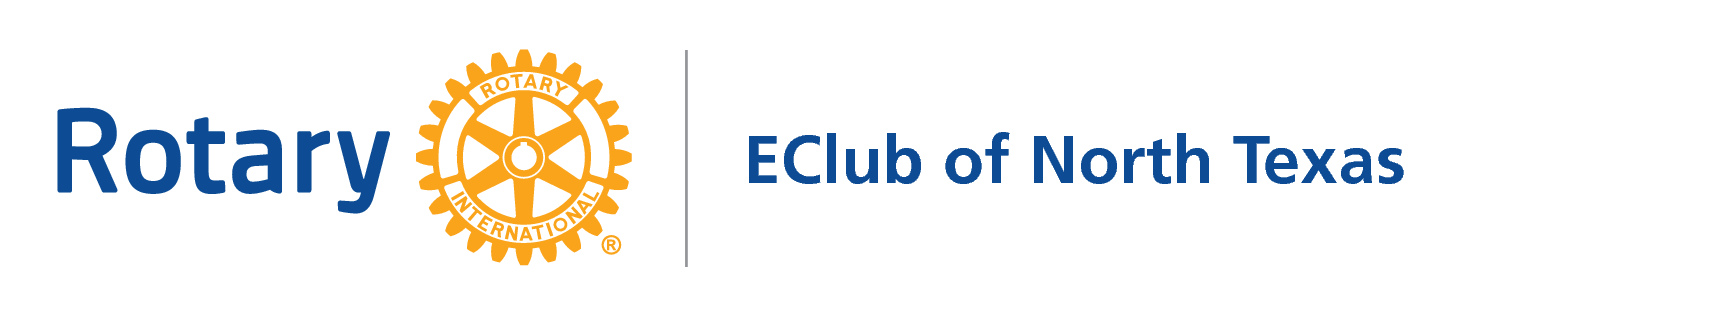 eClub of North Texas logo